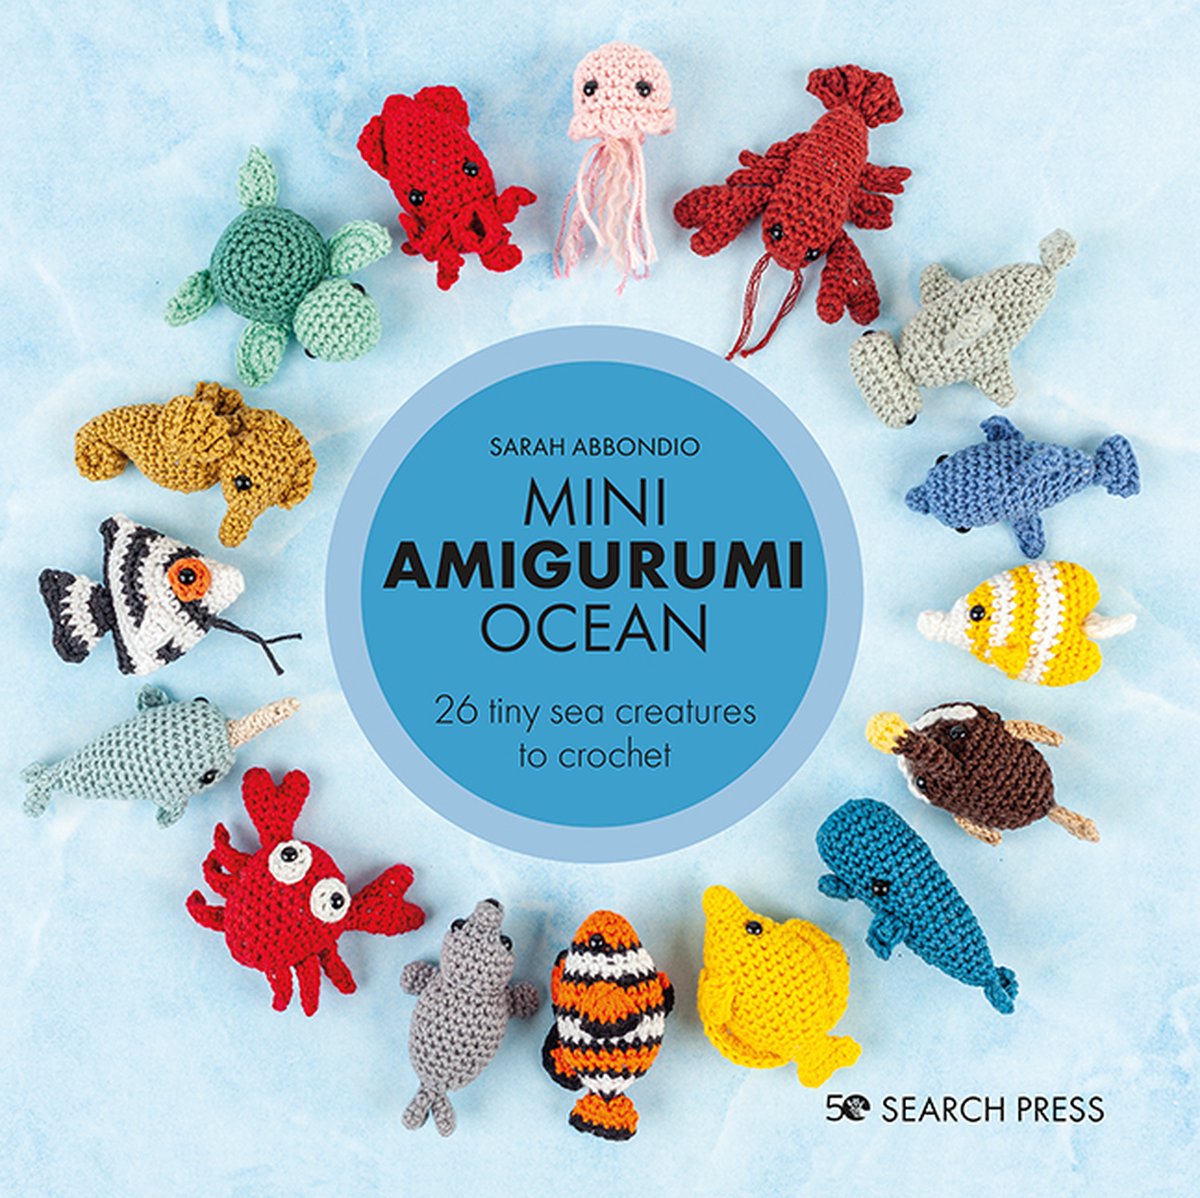 Mini Amigurumi- Mini Amigurumi Ocean - Sarah Abbondio